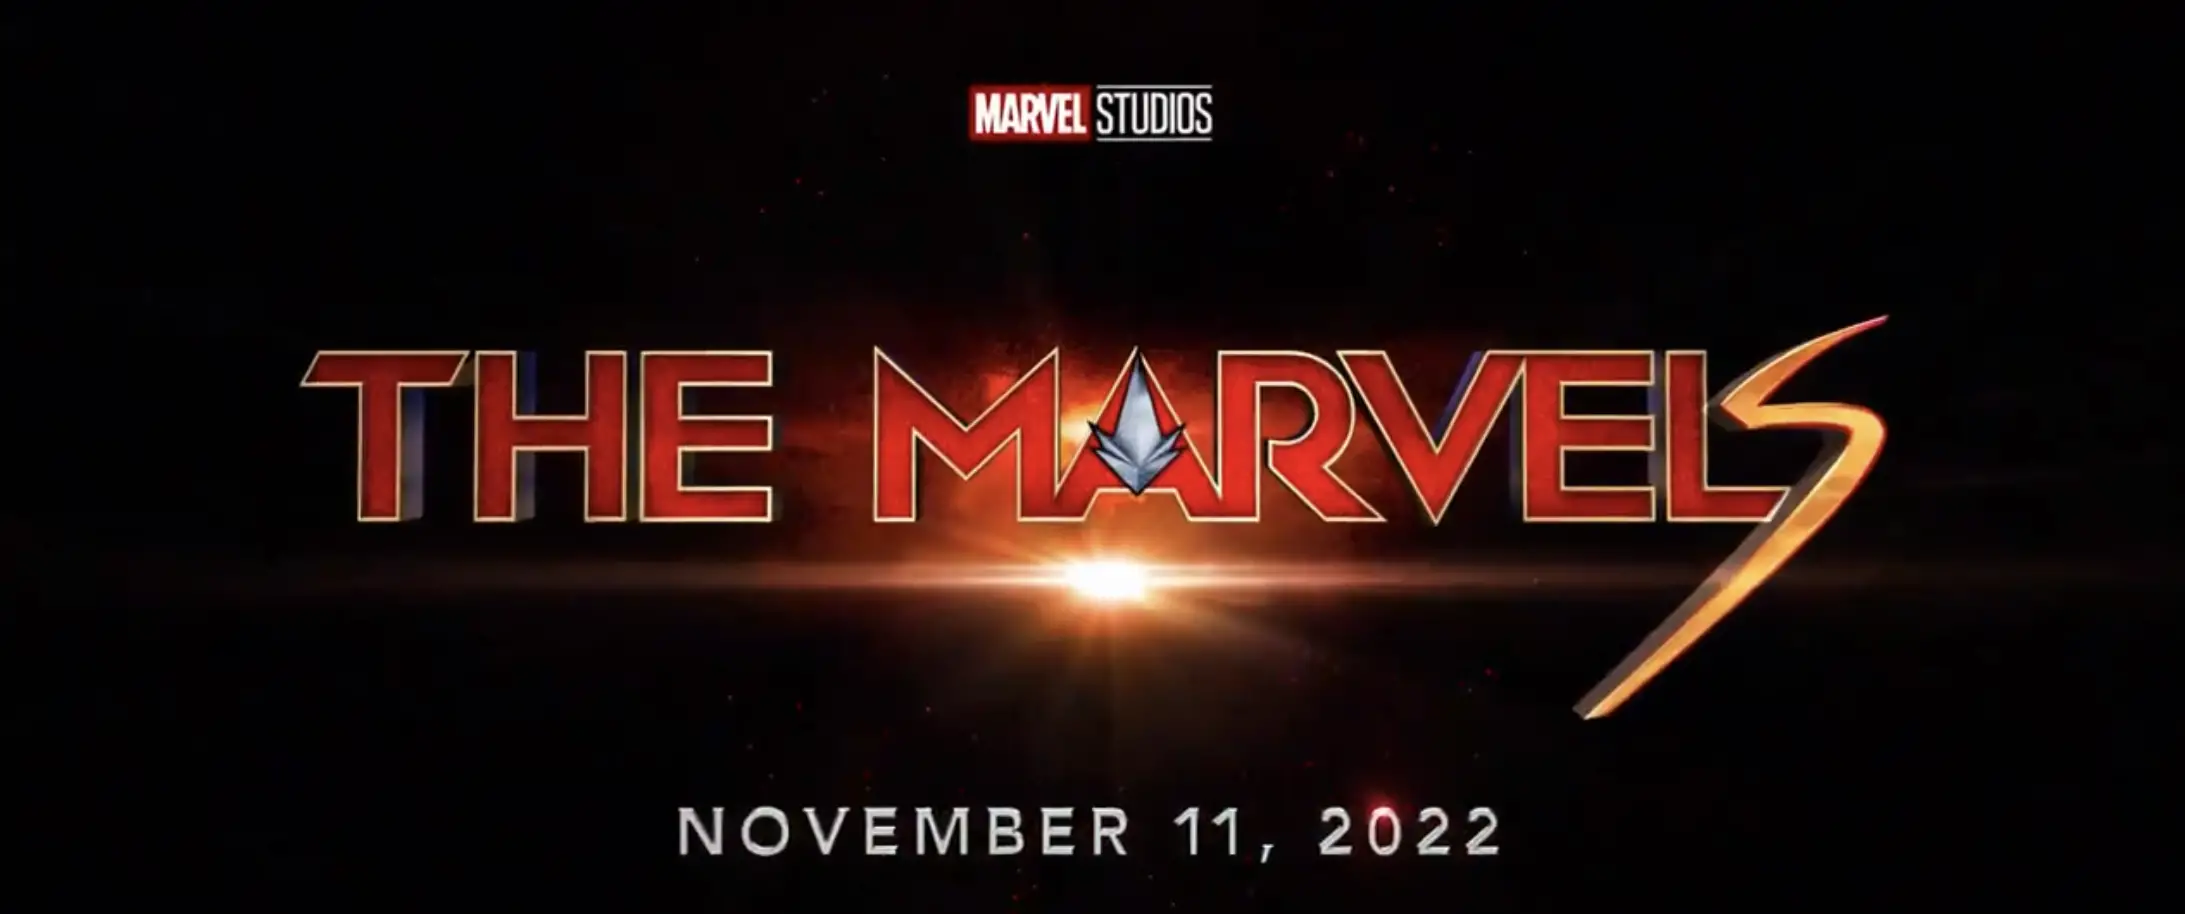 The Marvels Nov 11